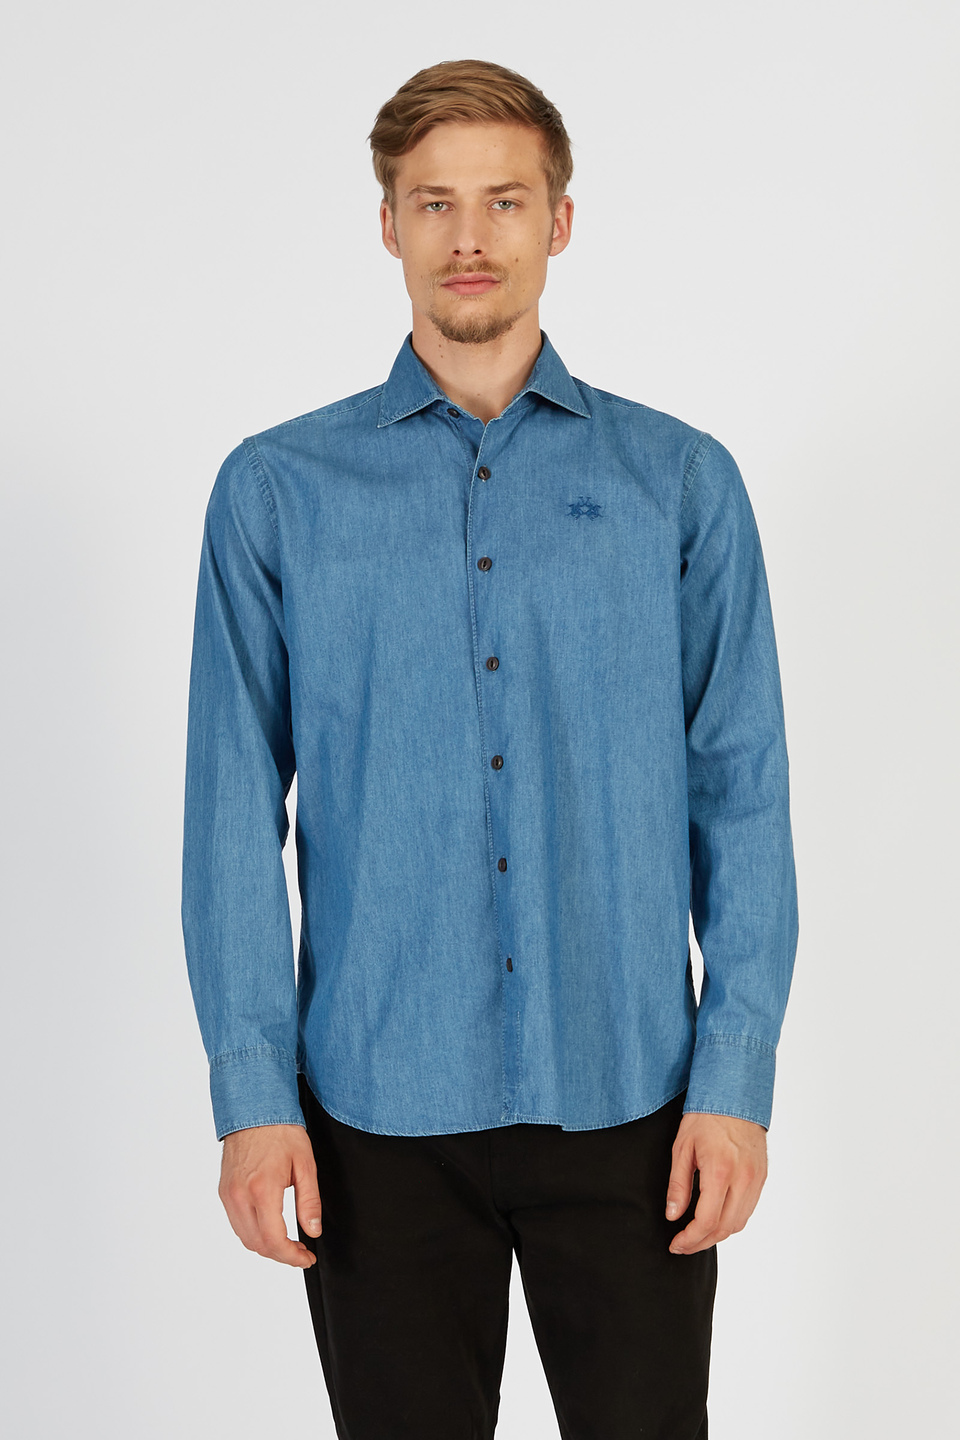 Men’s Timeless denim shirt with regular fit long sleeves | La Martina - Official Online Shop